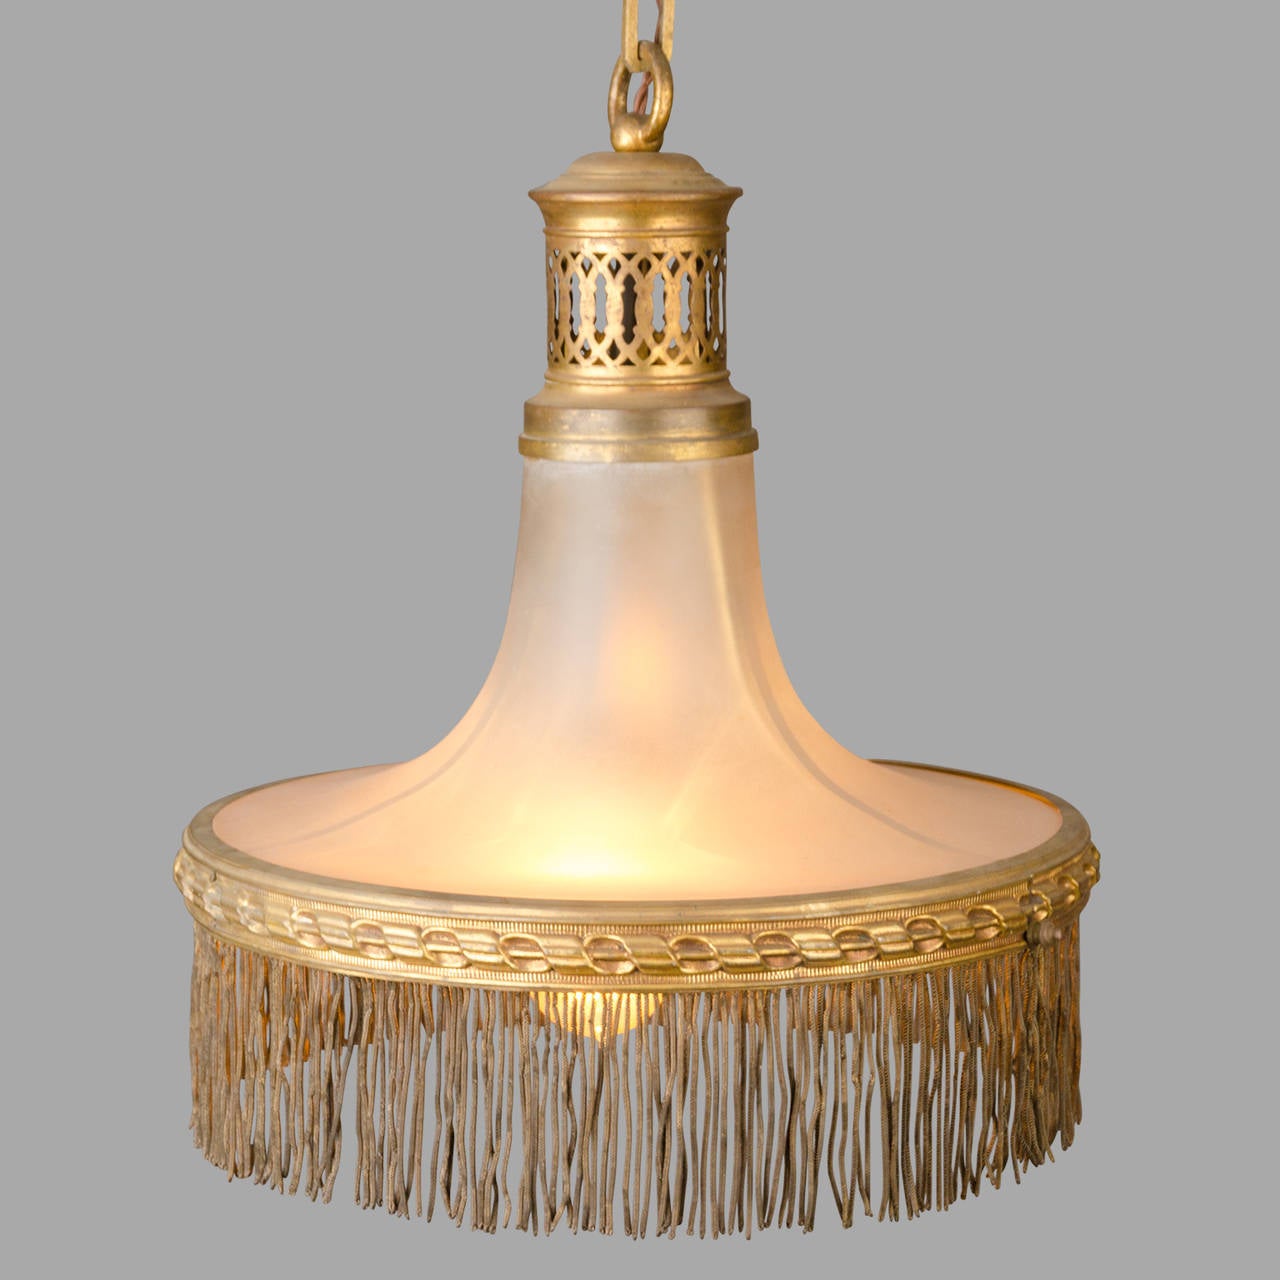 Brass pendant light with a glass reflector, circa 1920. Decorative brass fringes.